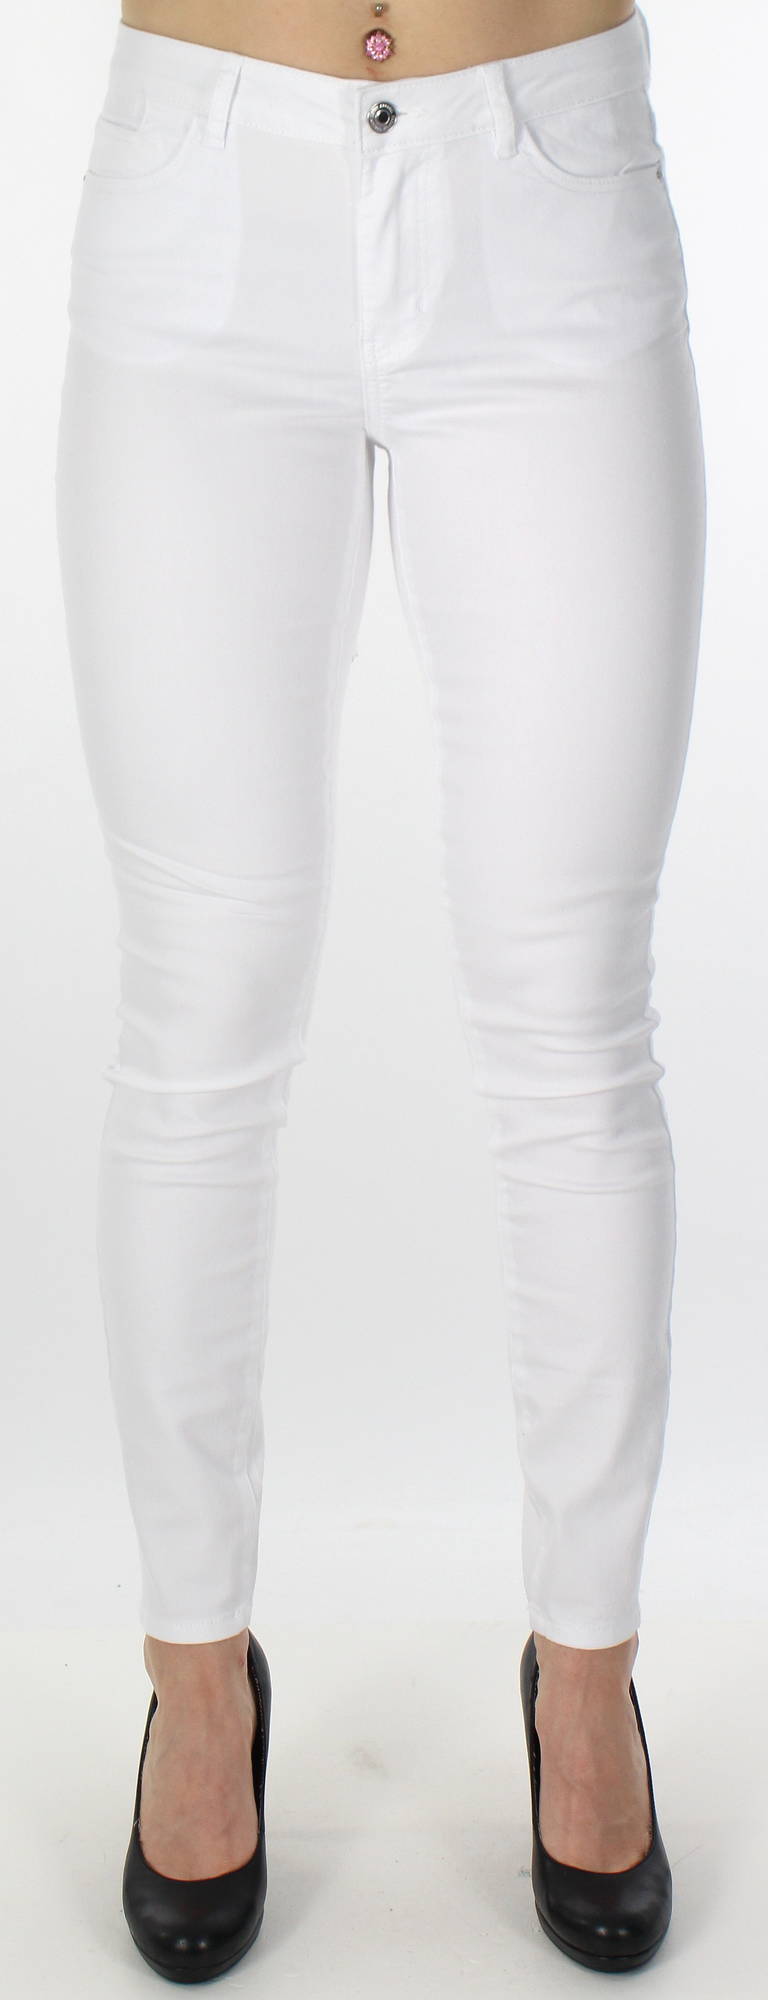 Vero Moda Jeans Julia flex it slim, White - Stilettoshop.eu webstore